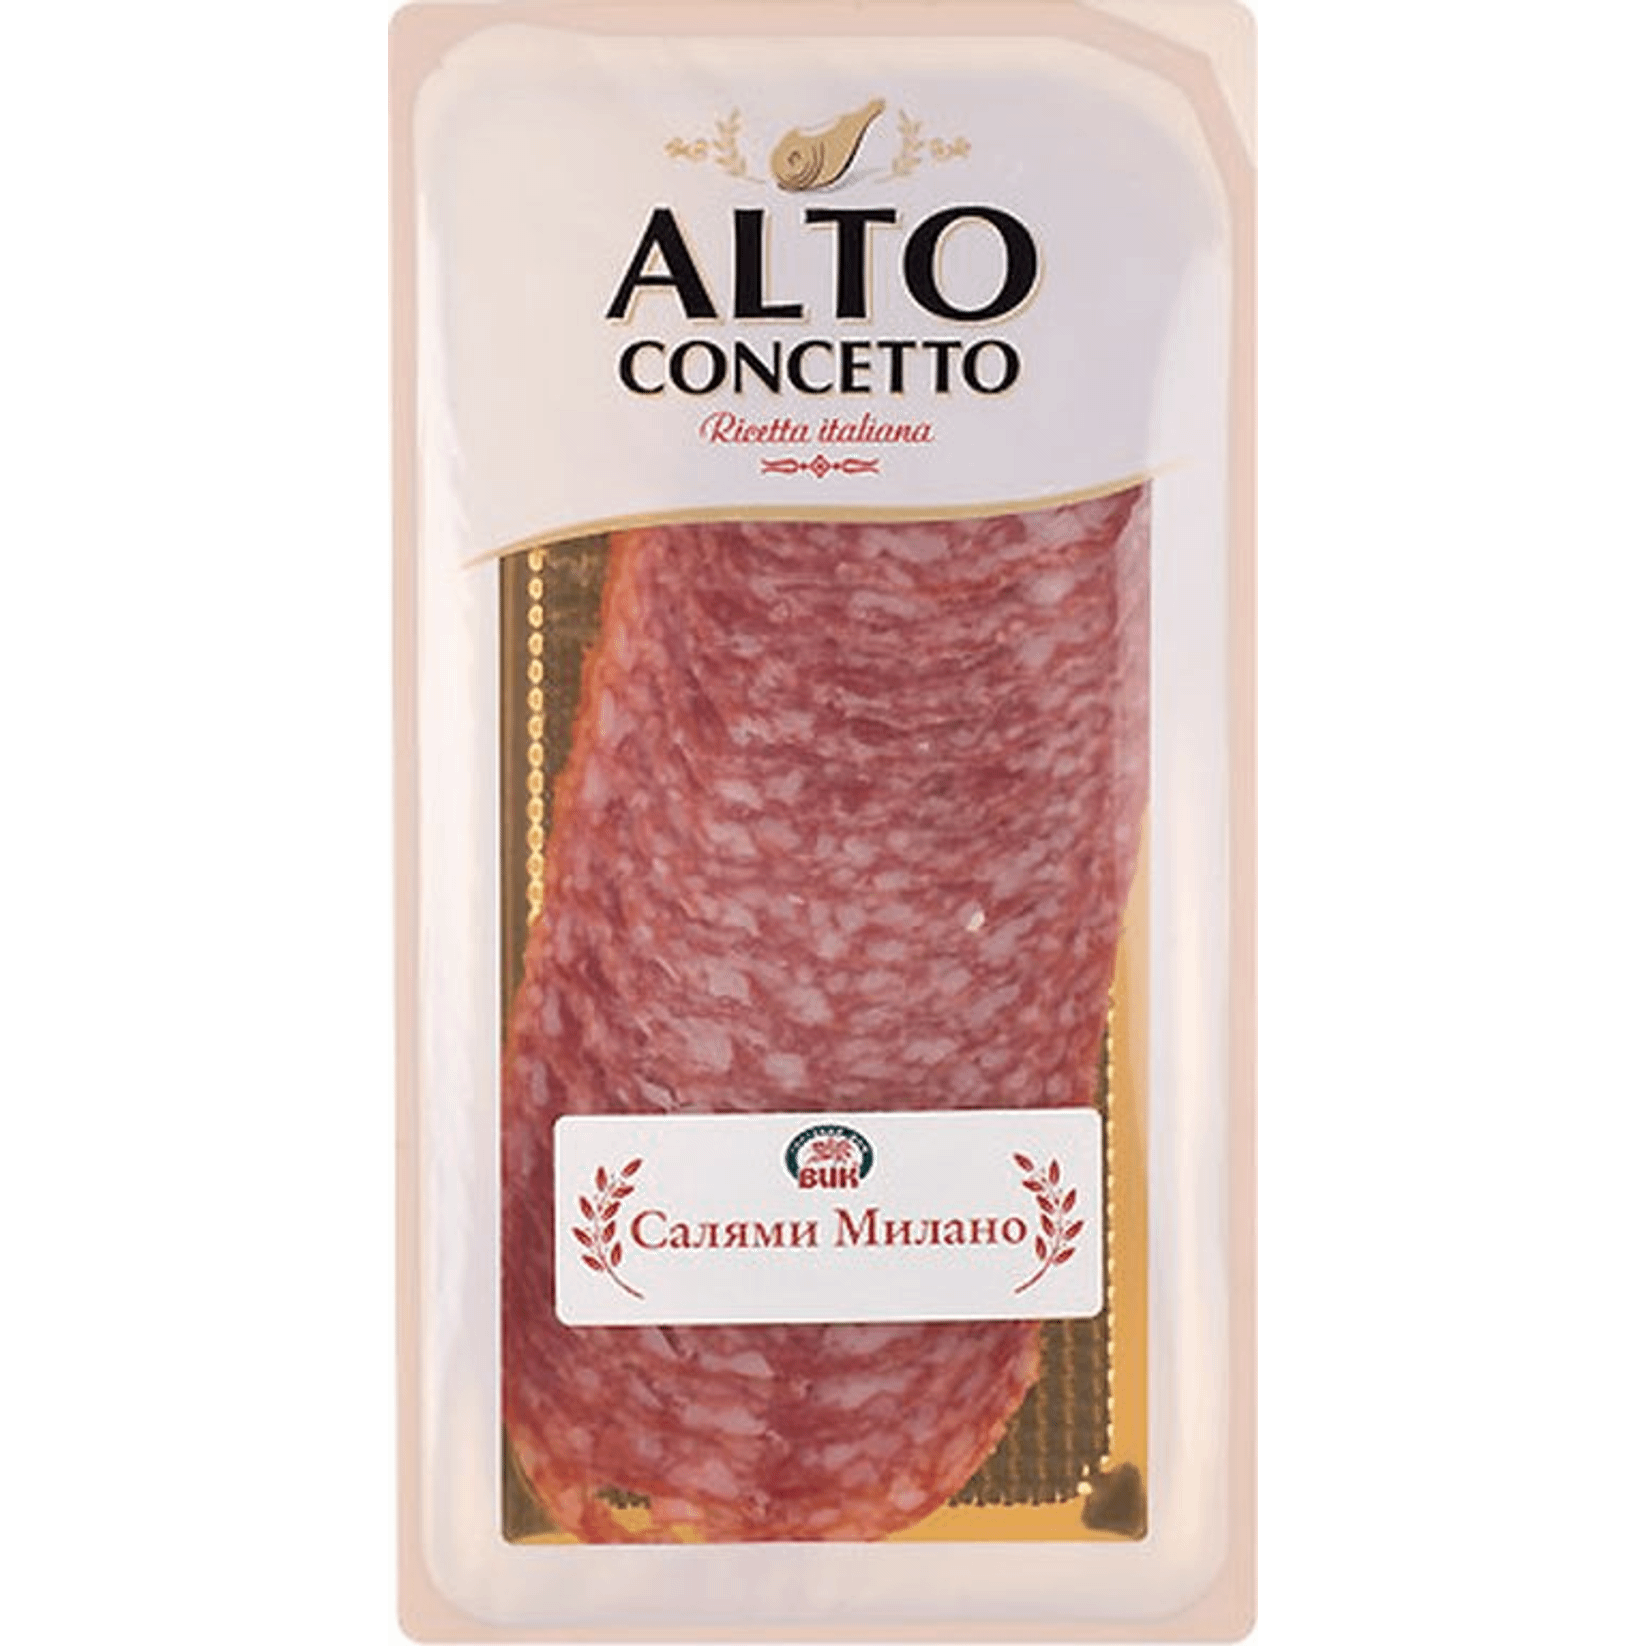 Alto Concetto, Salame Milano, sliced